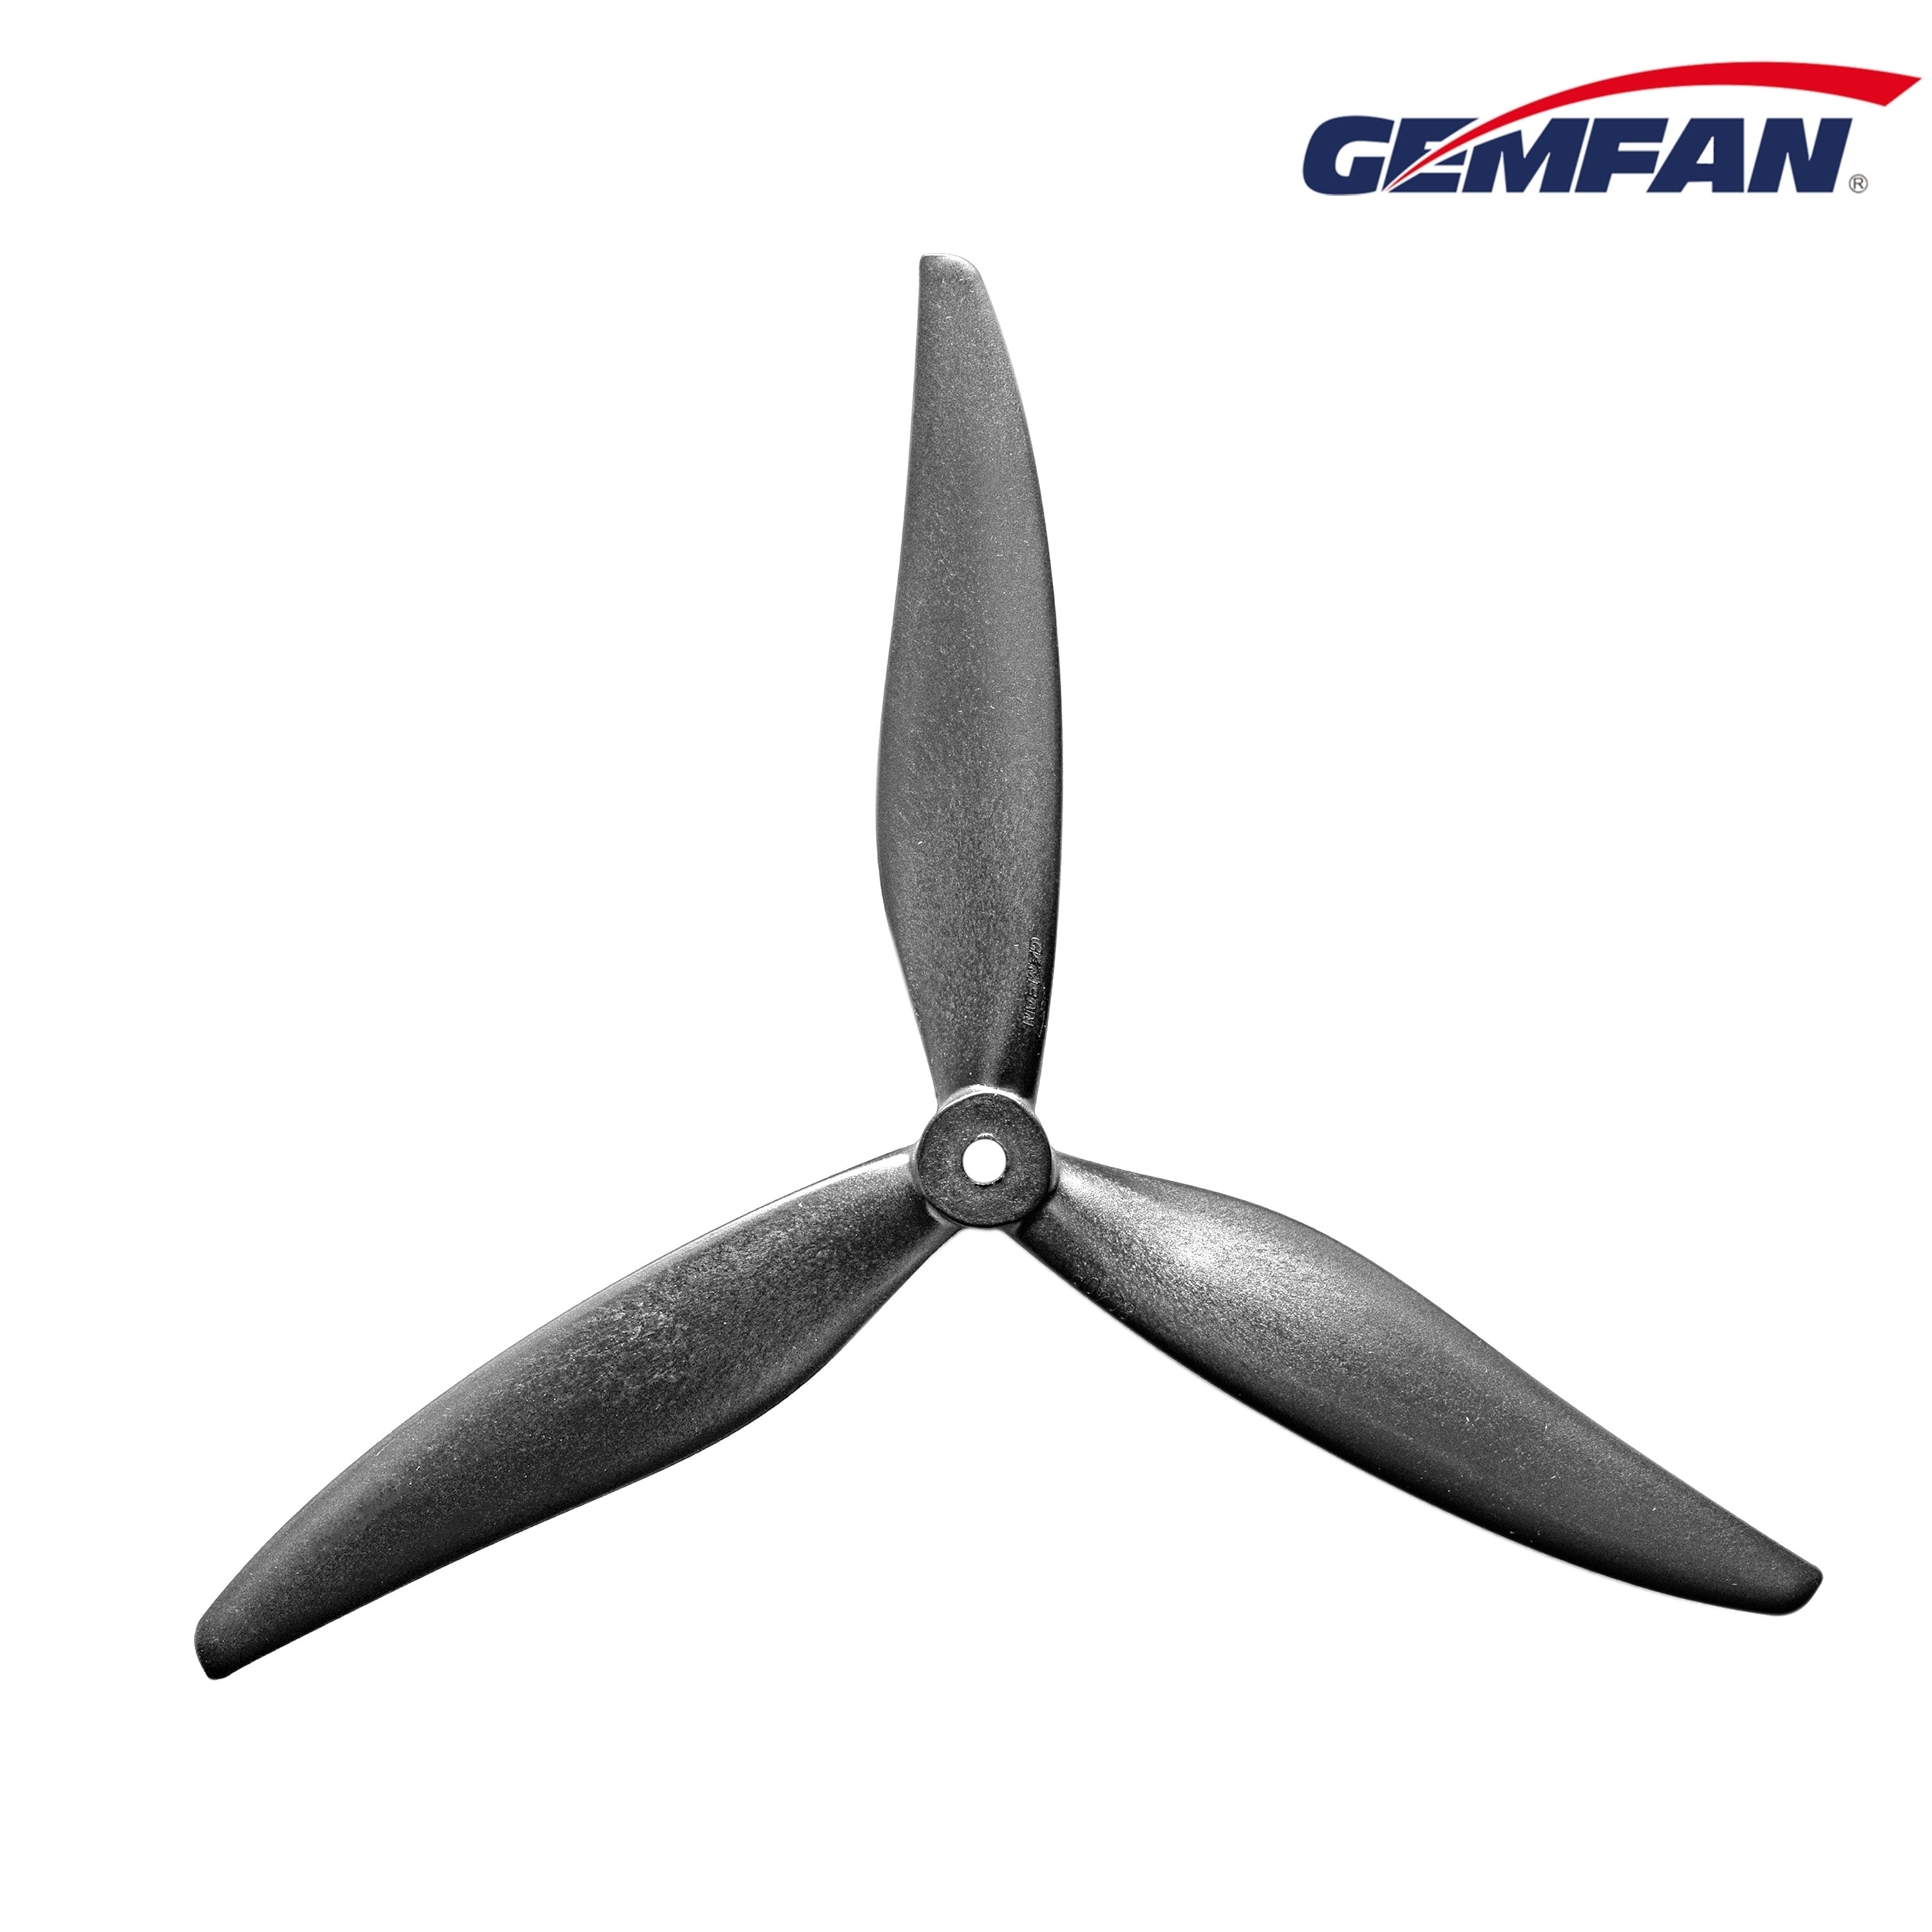 Gemfan 8040 CL Cinelifter 3-Blade Propeller - Nylon Carbon (1CW + 1CCW)